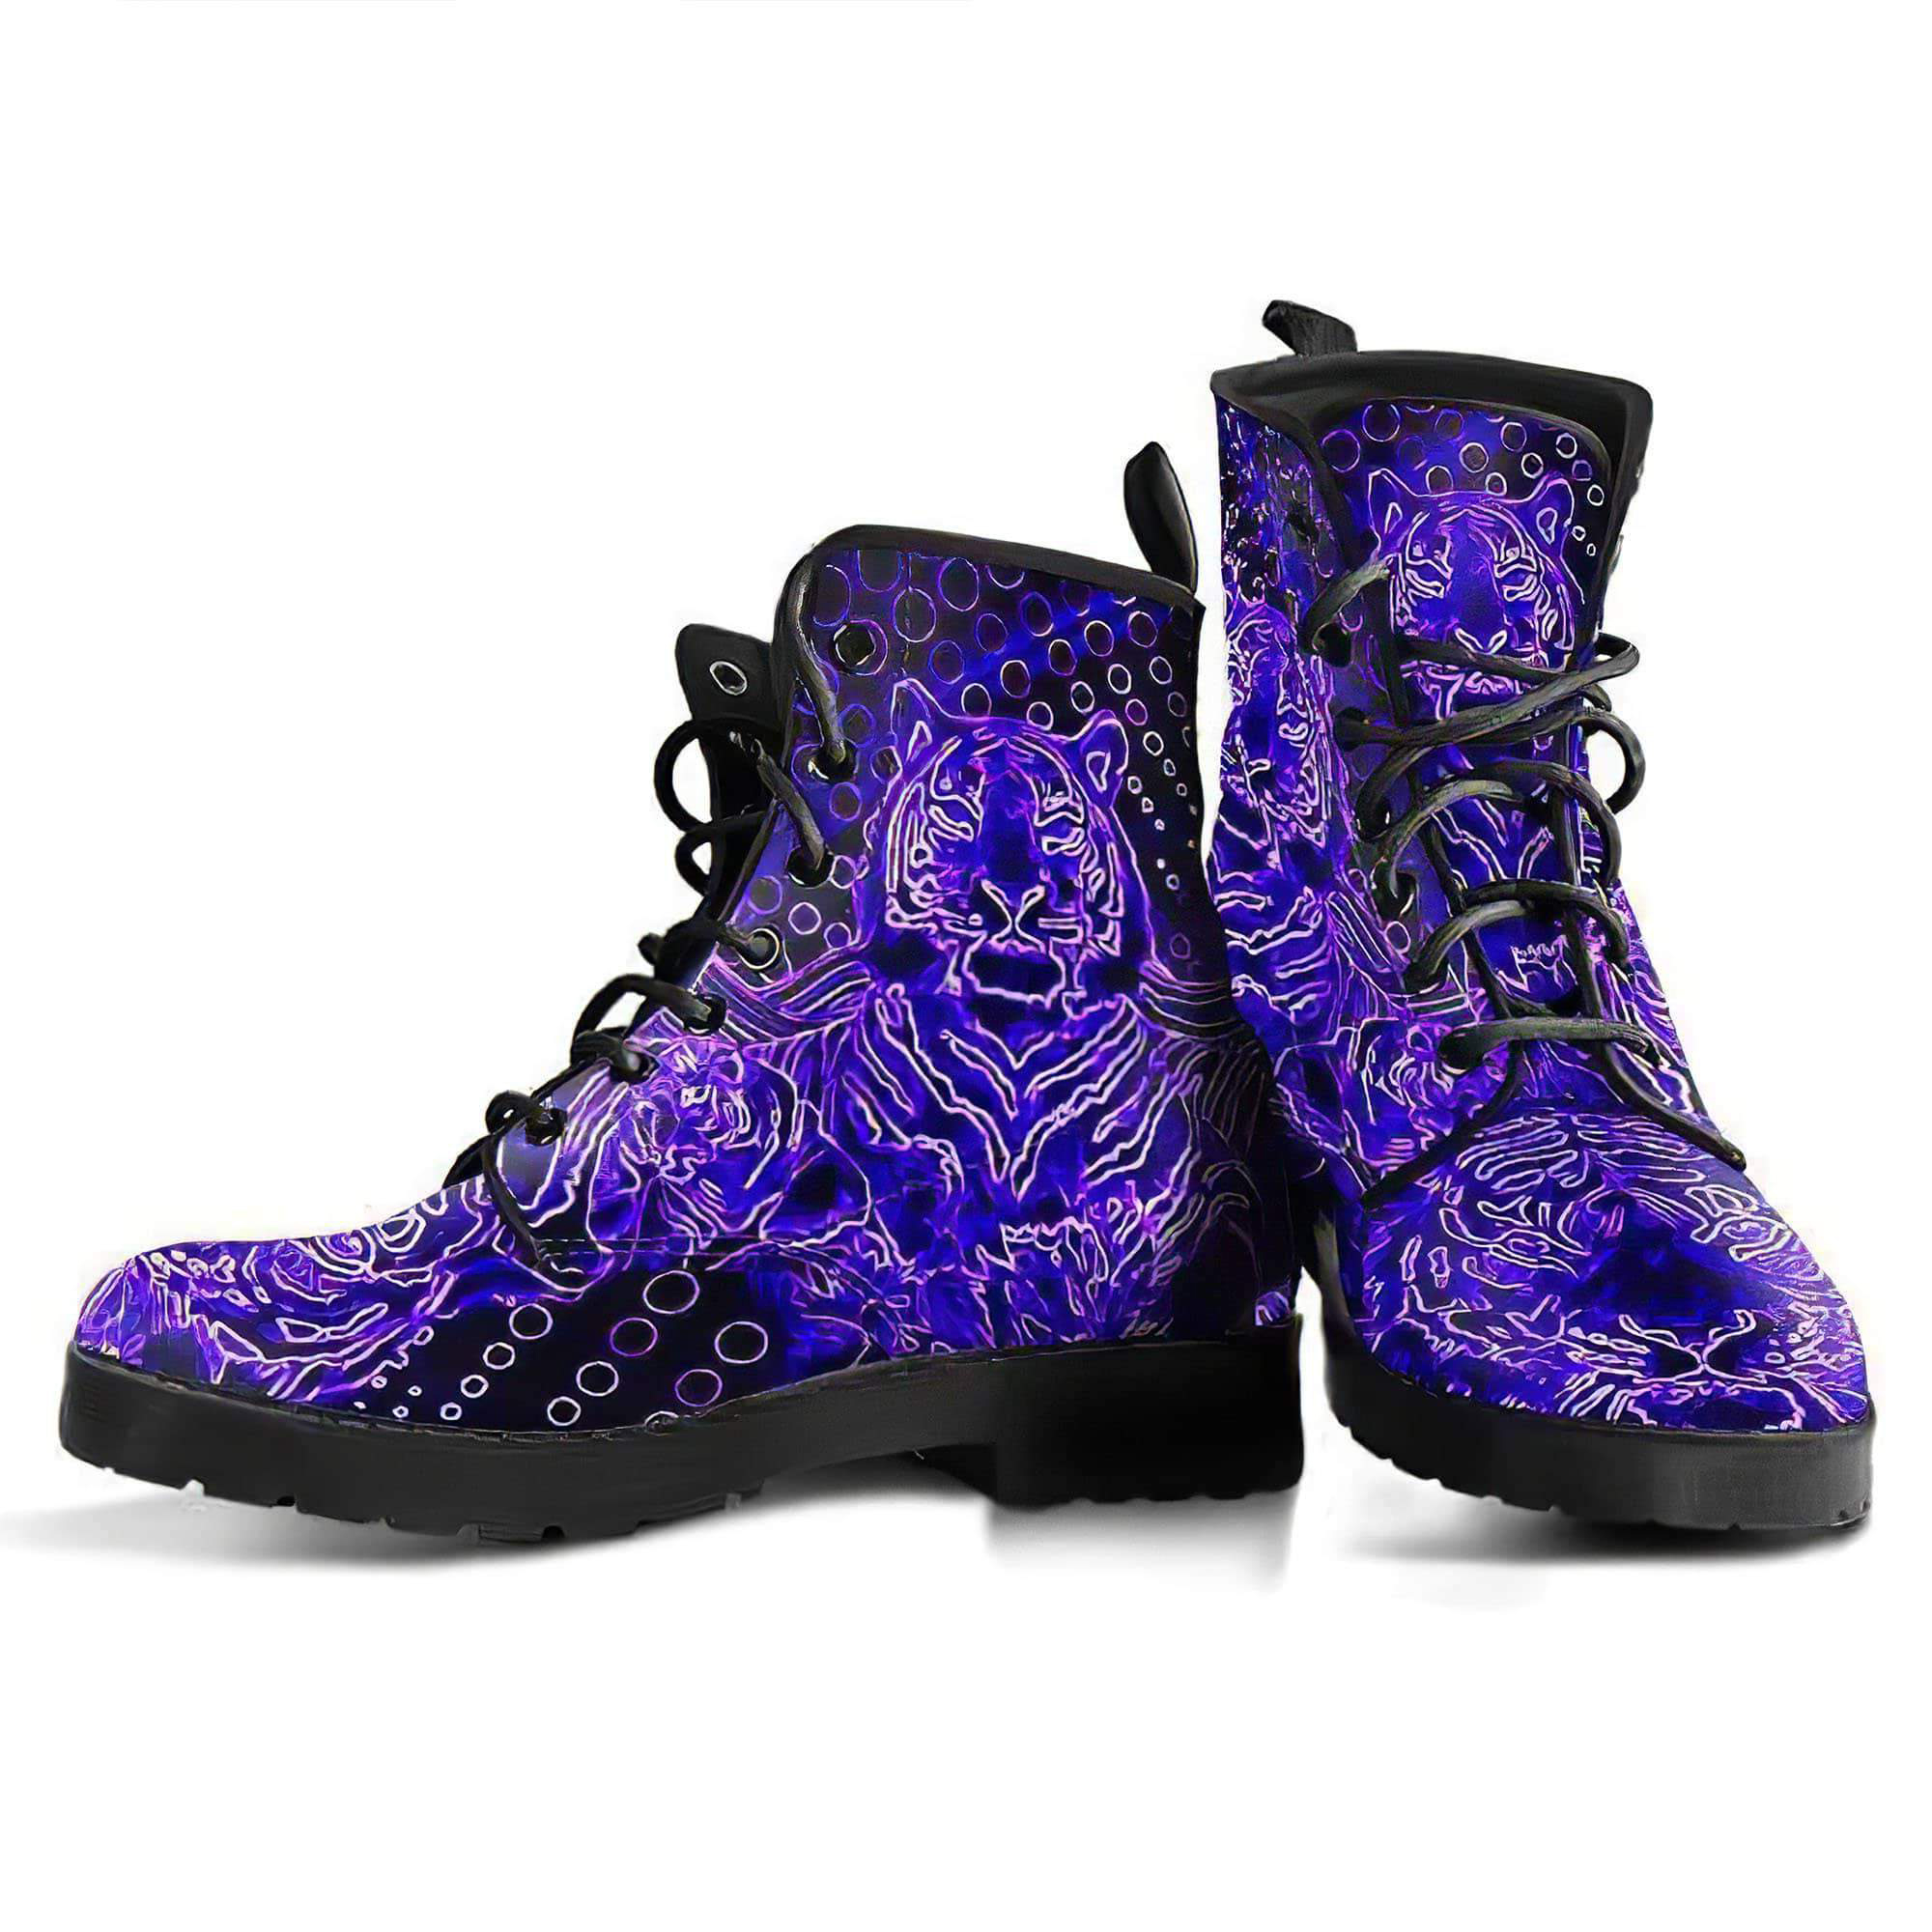 purple-tigers-women-s-boots-vegan-friendly-leather-women-s-leather-boots-12051940737085.jpg